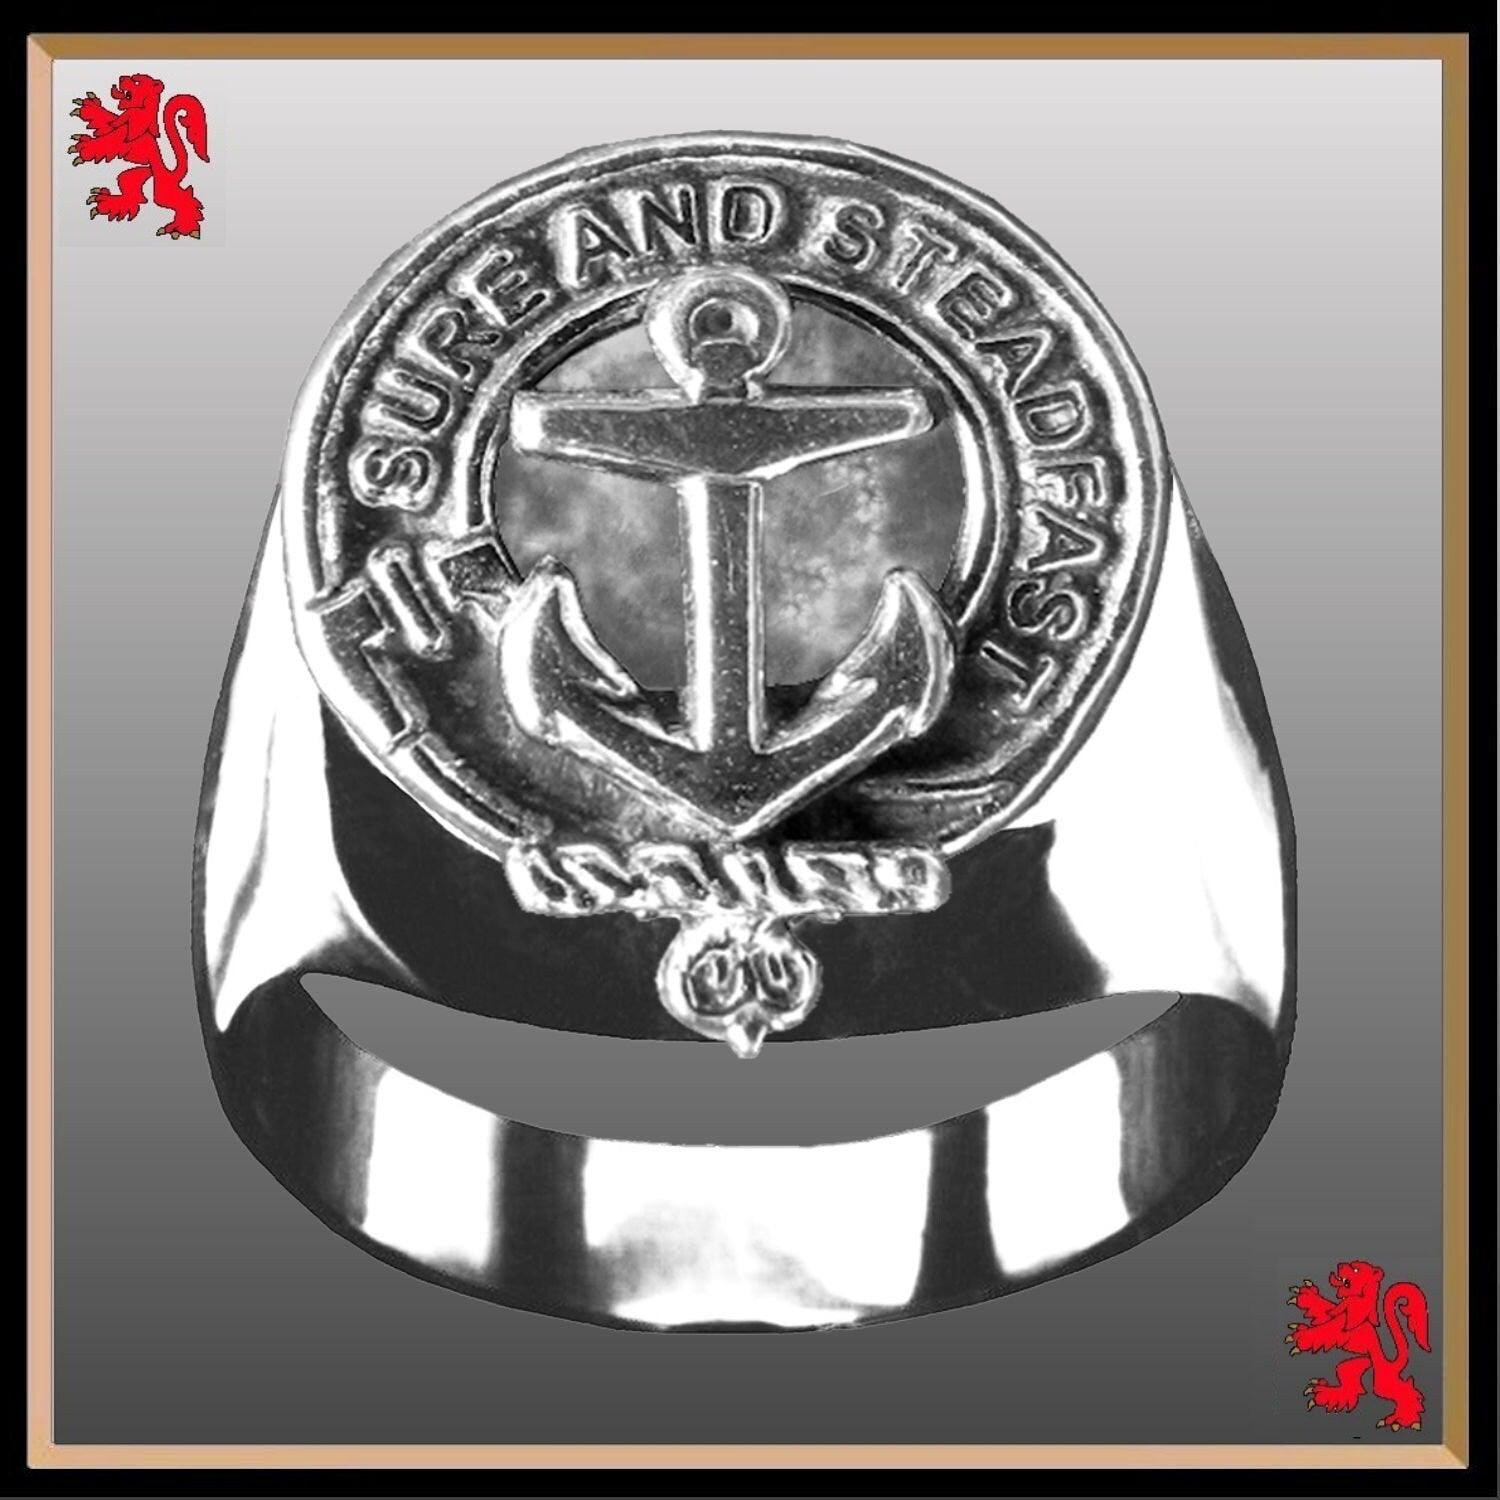 Clark Scottish Clan Crest Ring GC100  ~  Sterling Silver and Karat Gold